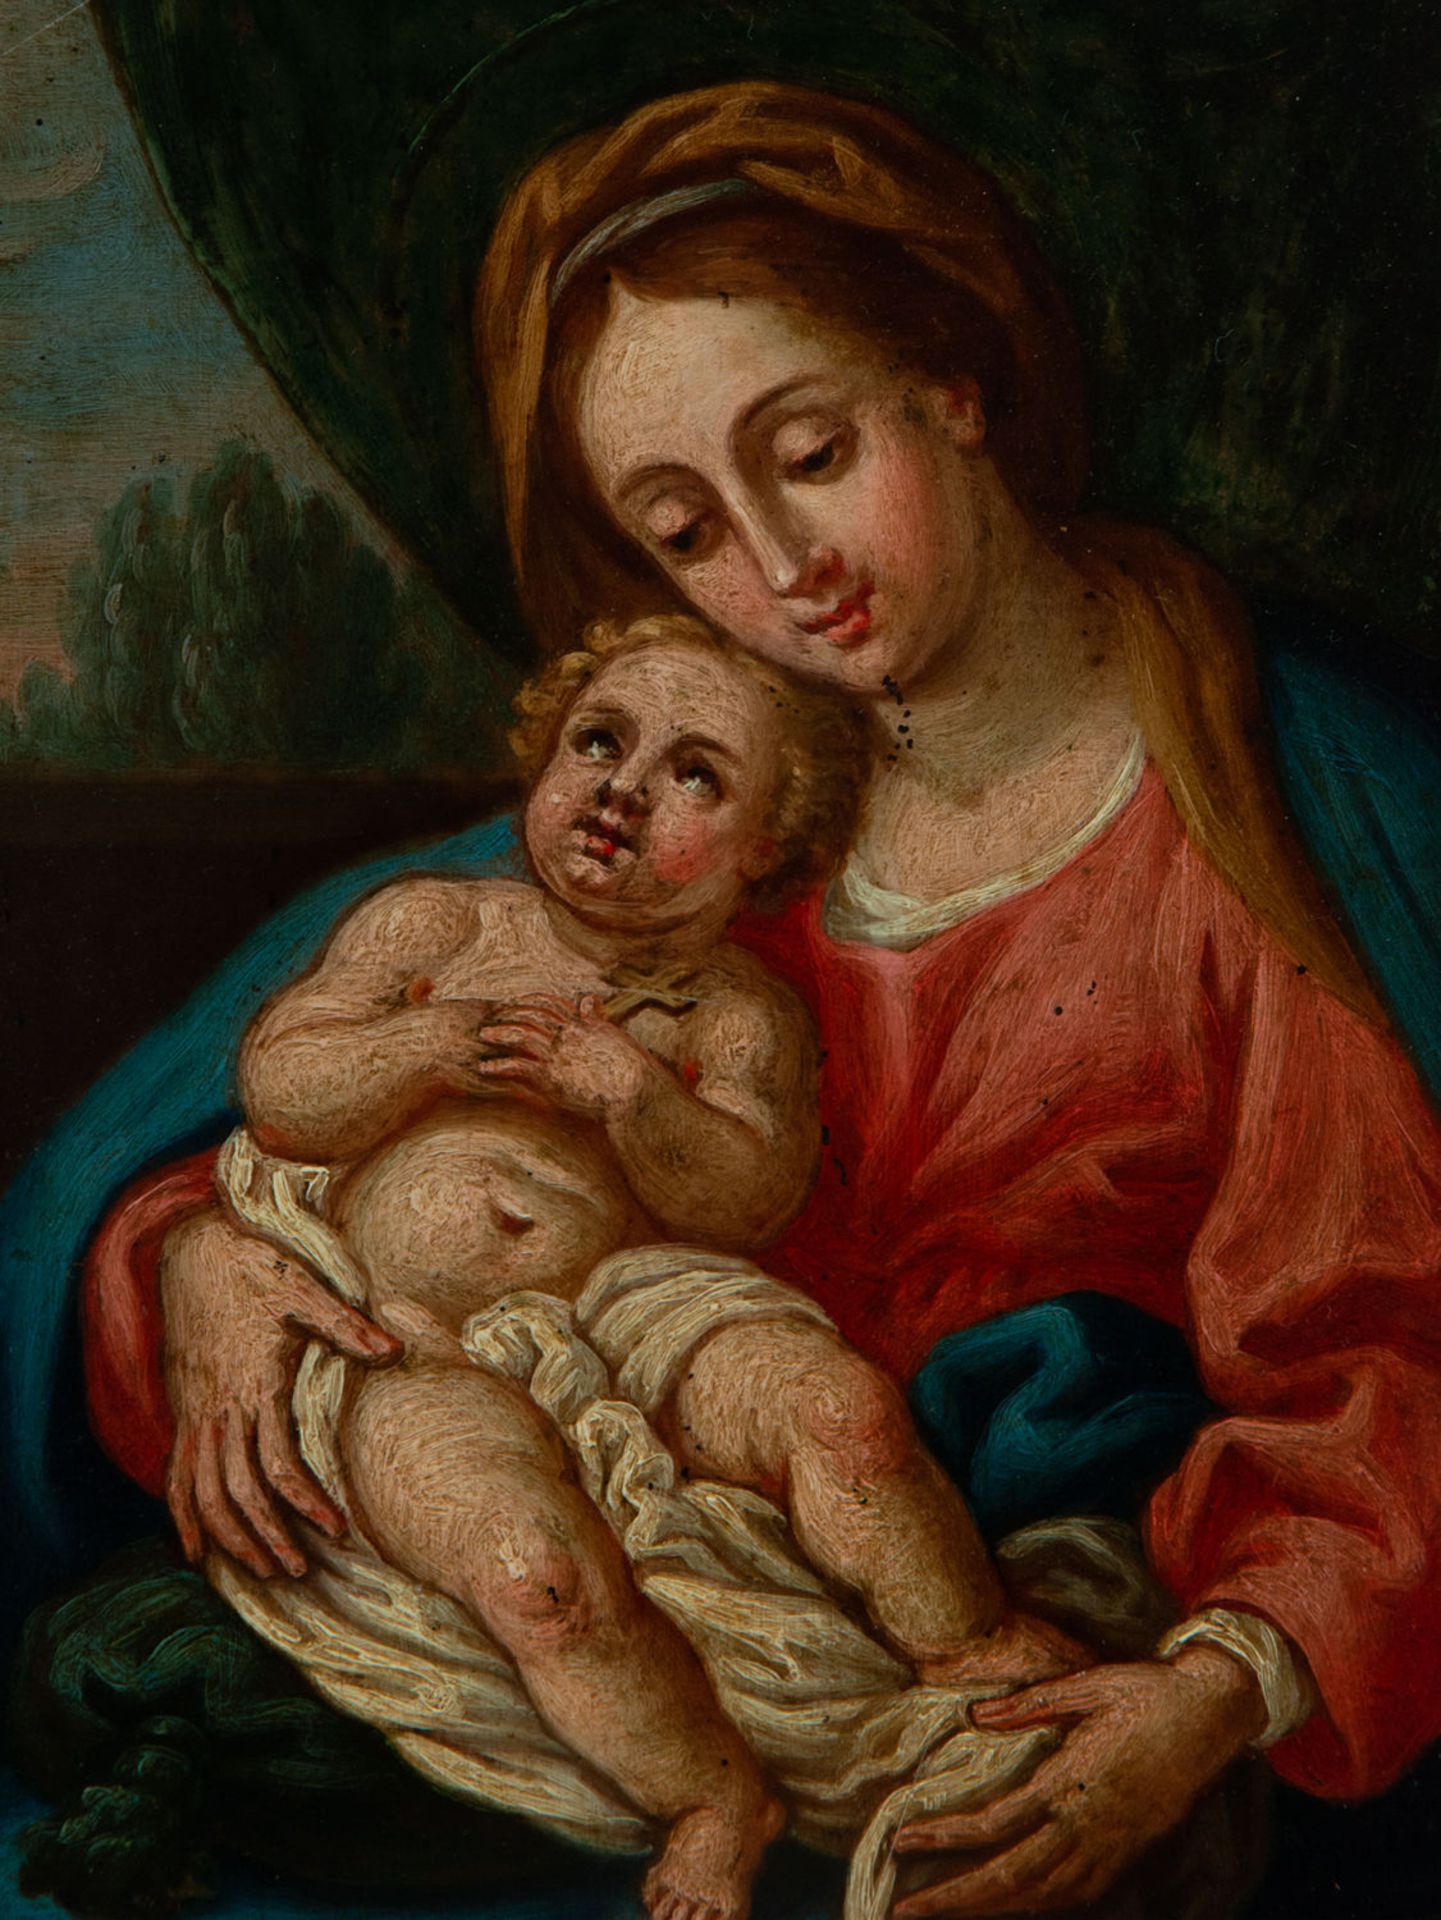 Madonna with Child, 18th century Italian school - Image 2 of 5